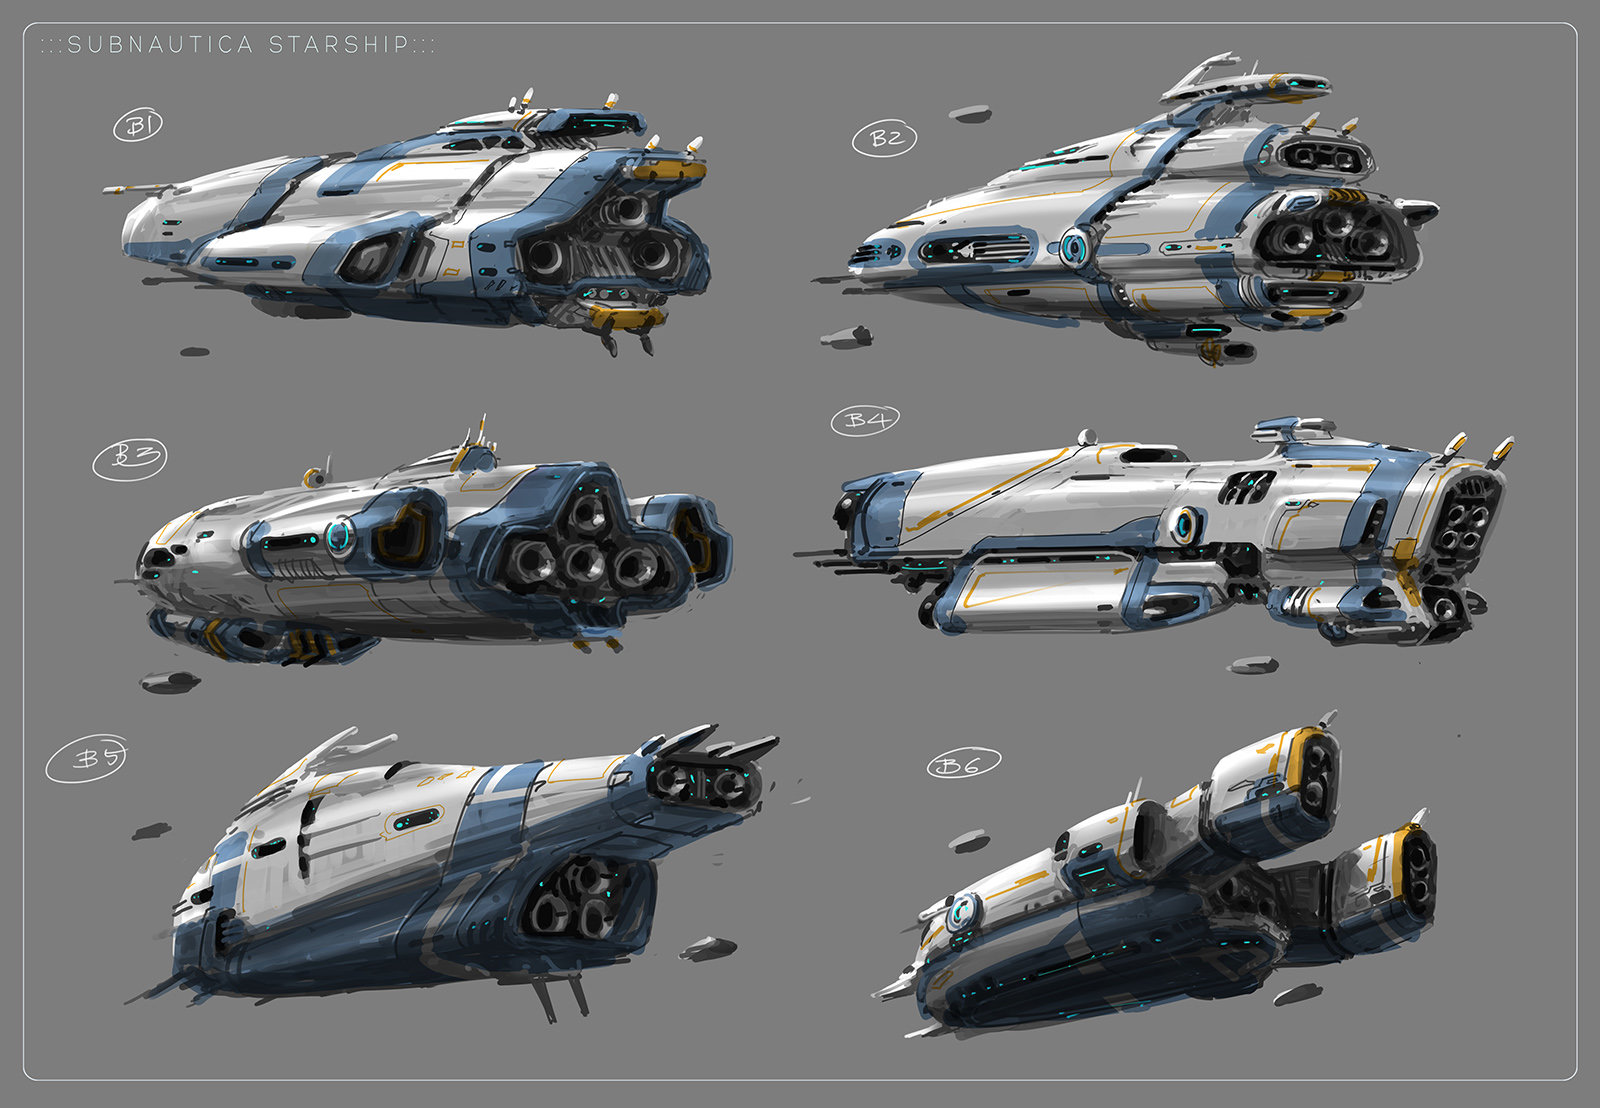 Subnautica: Sci-Vessel Starship Early Concepts V1